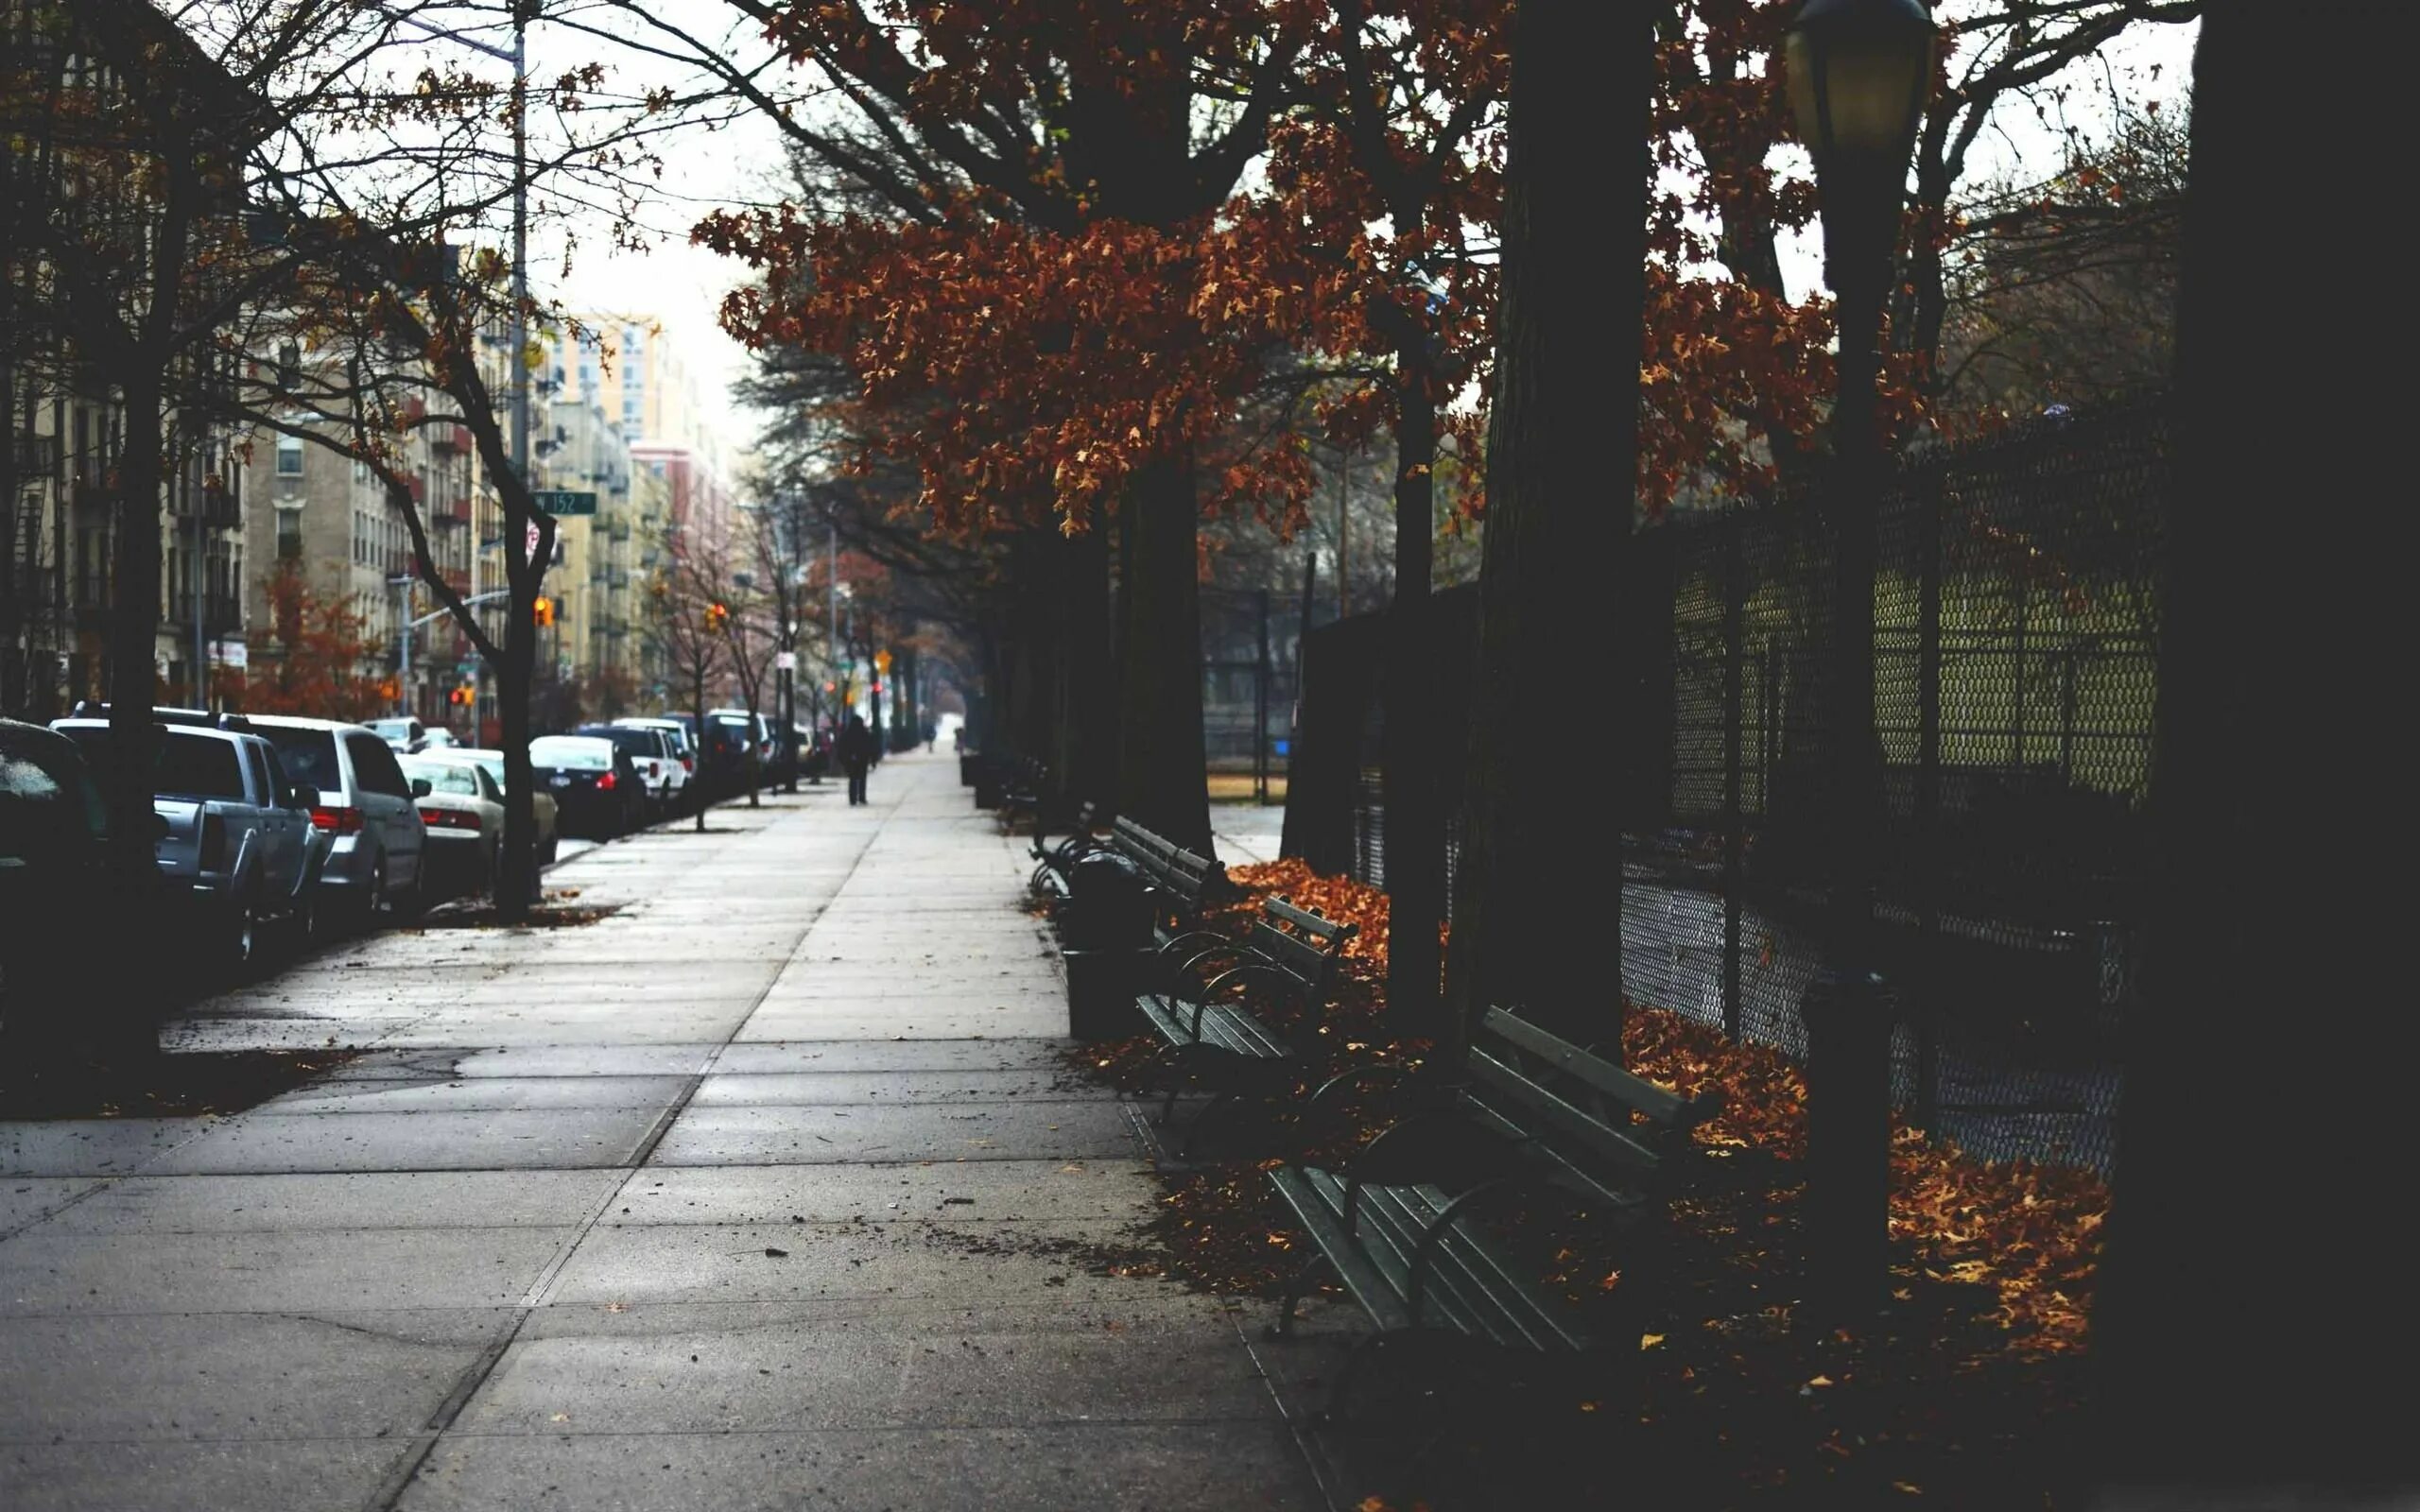 Обои на стол на улице. Осенний Нью-Йорк Эстетика. Осень в Нью-Йорке» (autumn in New York), 2000. Нью Йорк aesthetic улица. Нью Йорк осень Эстетика.